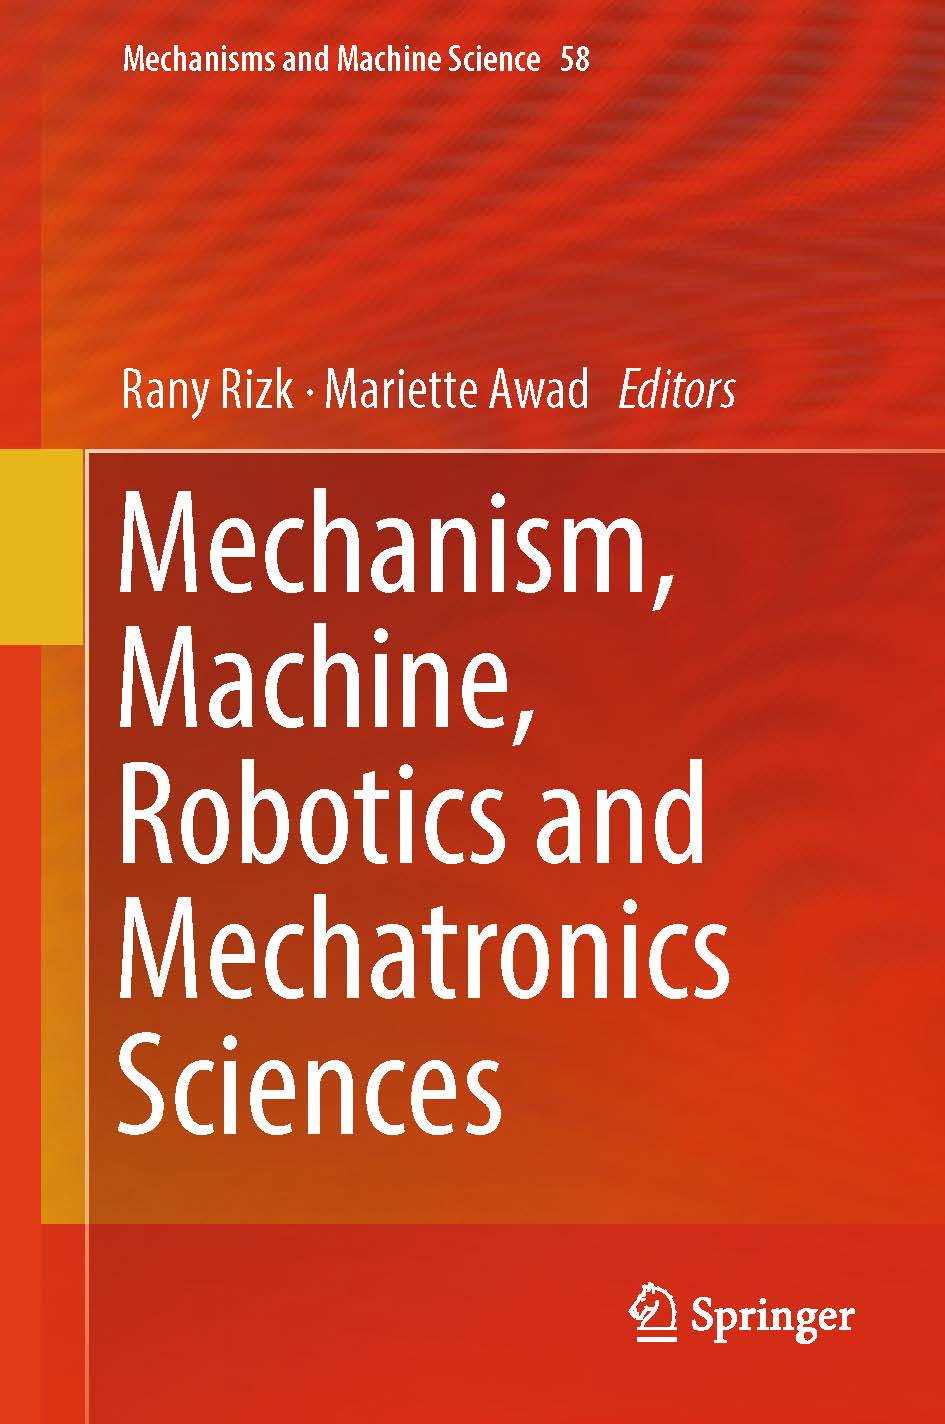 页面提取自－2019_Book_Mechanism, Machine, Robotics and Mechatronics Sciences.jpg